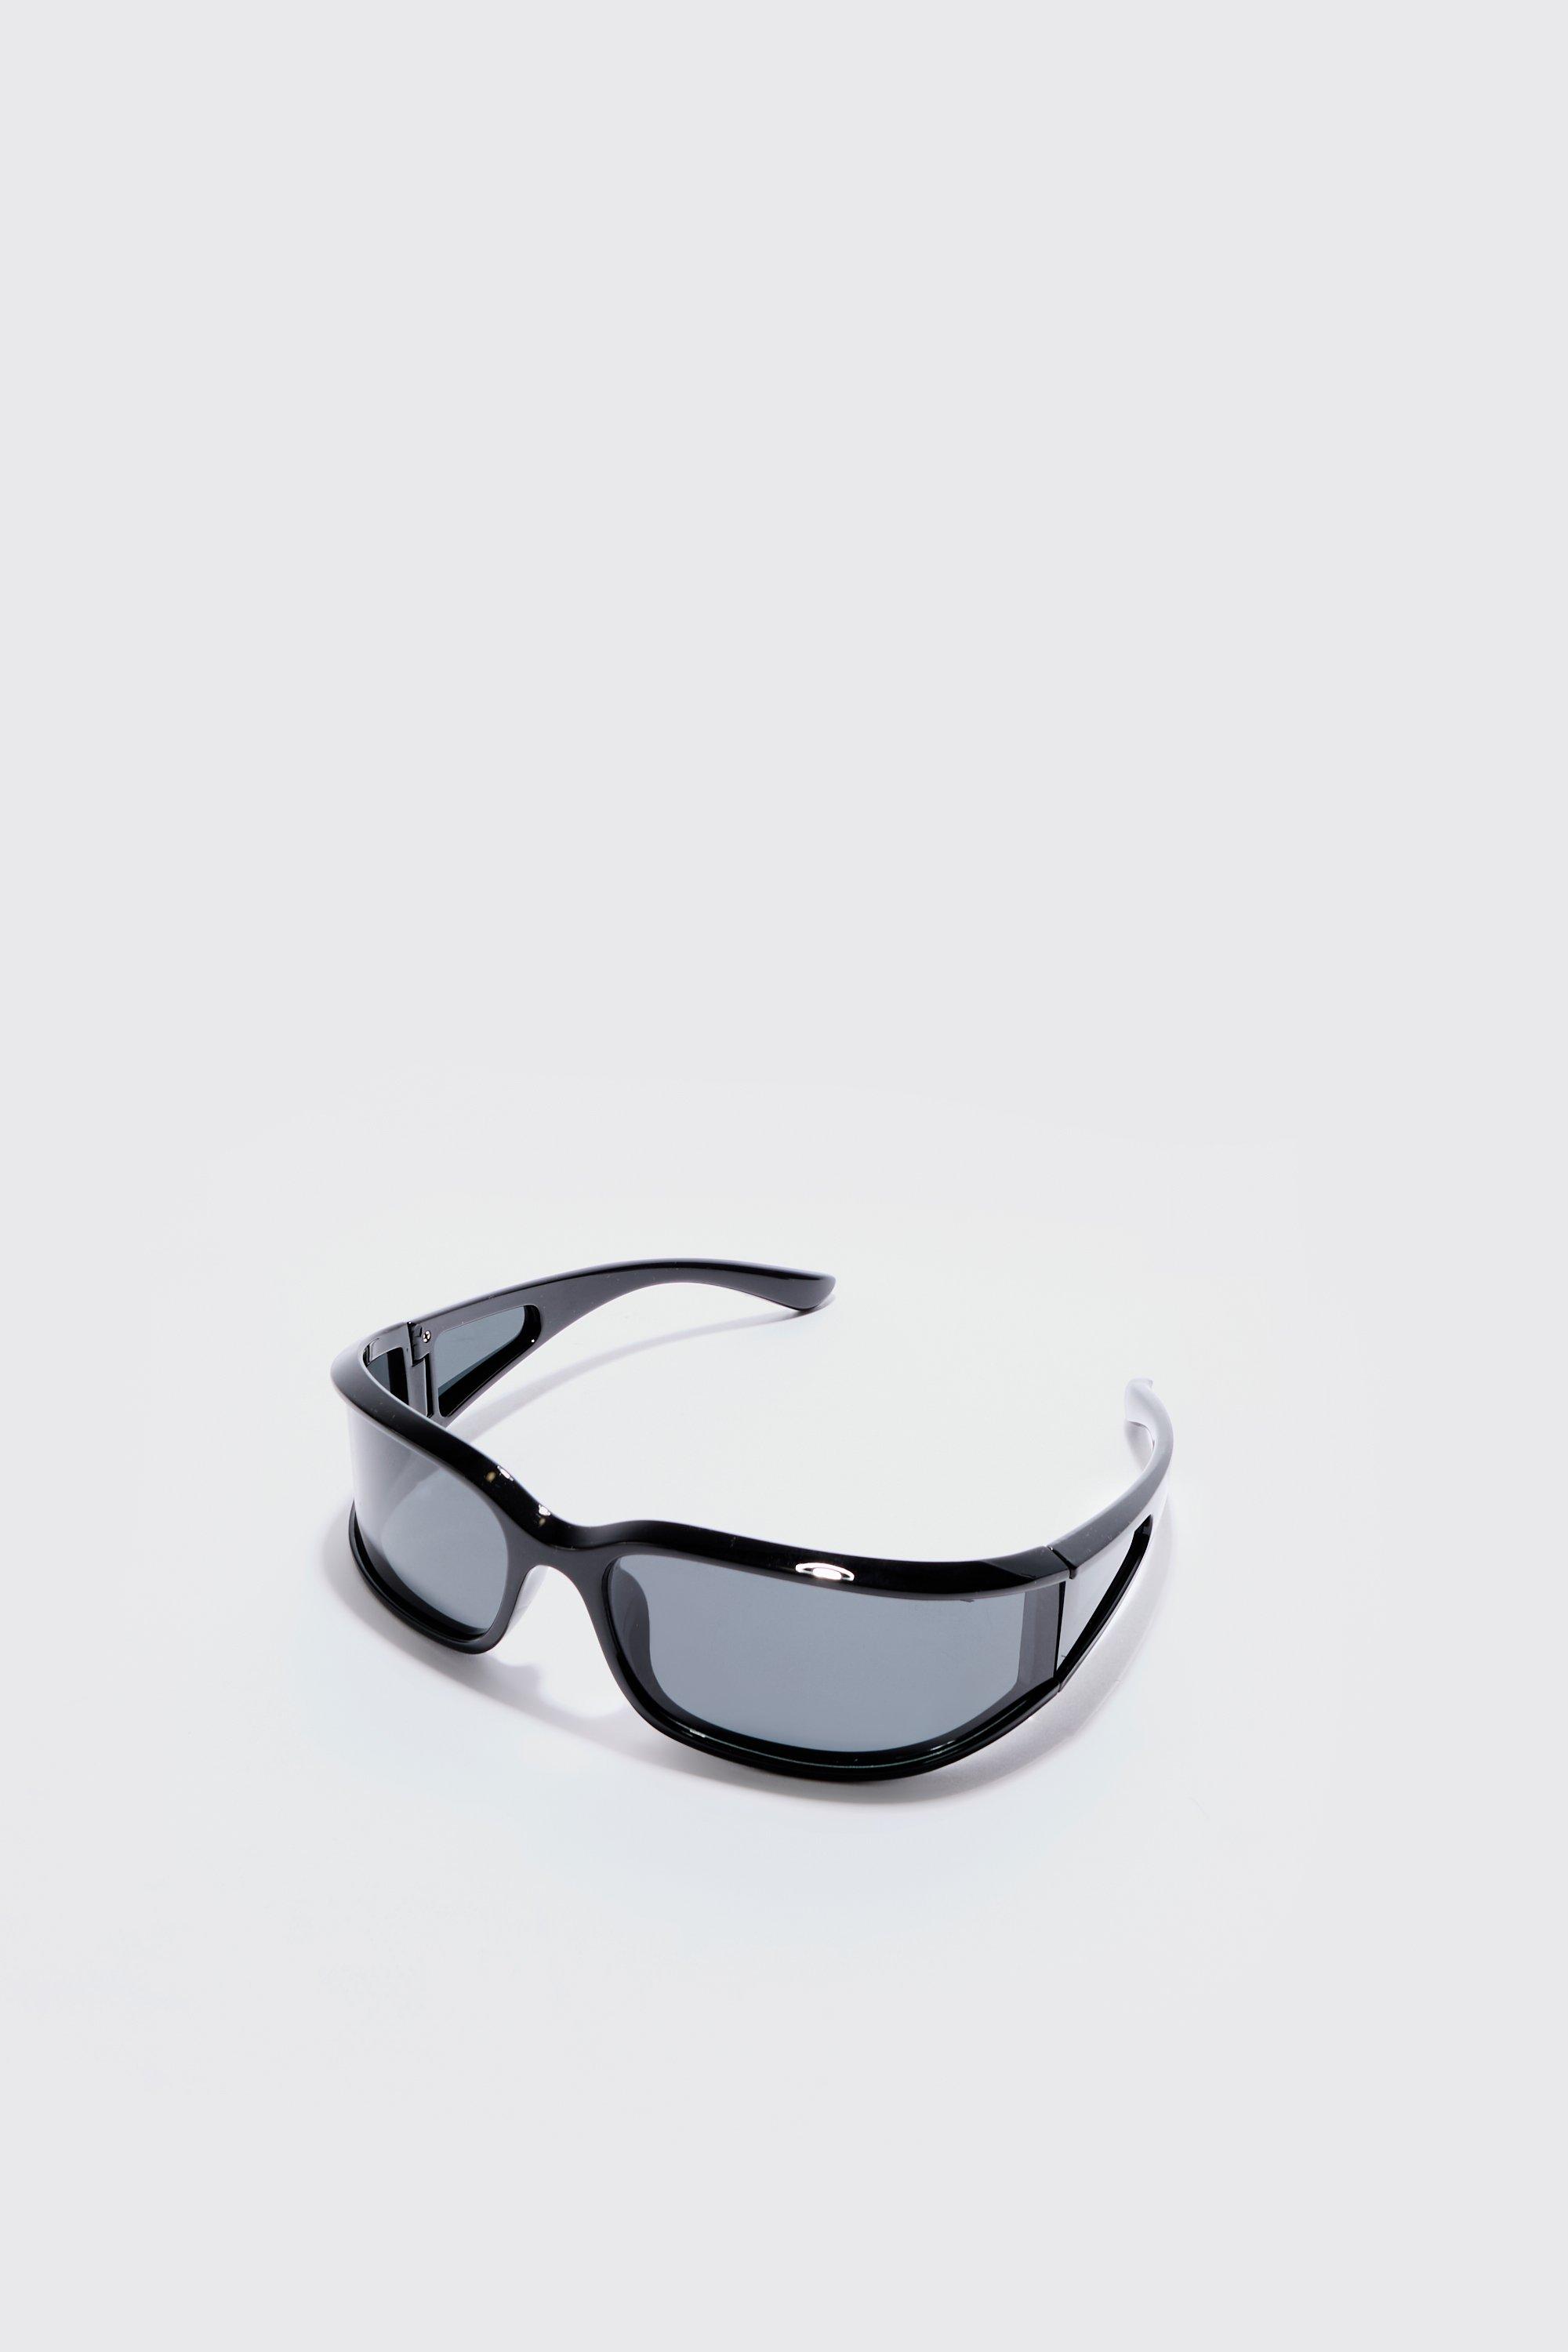 Image of Wrap Around Rectangle Sunglasses In Black, Nero